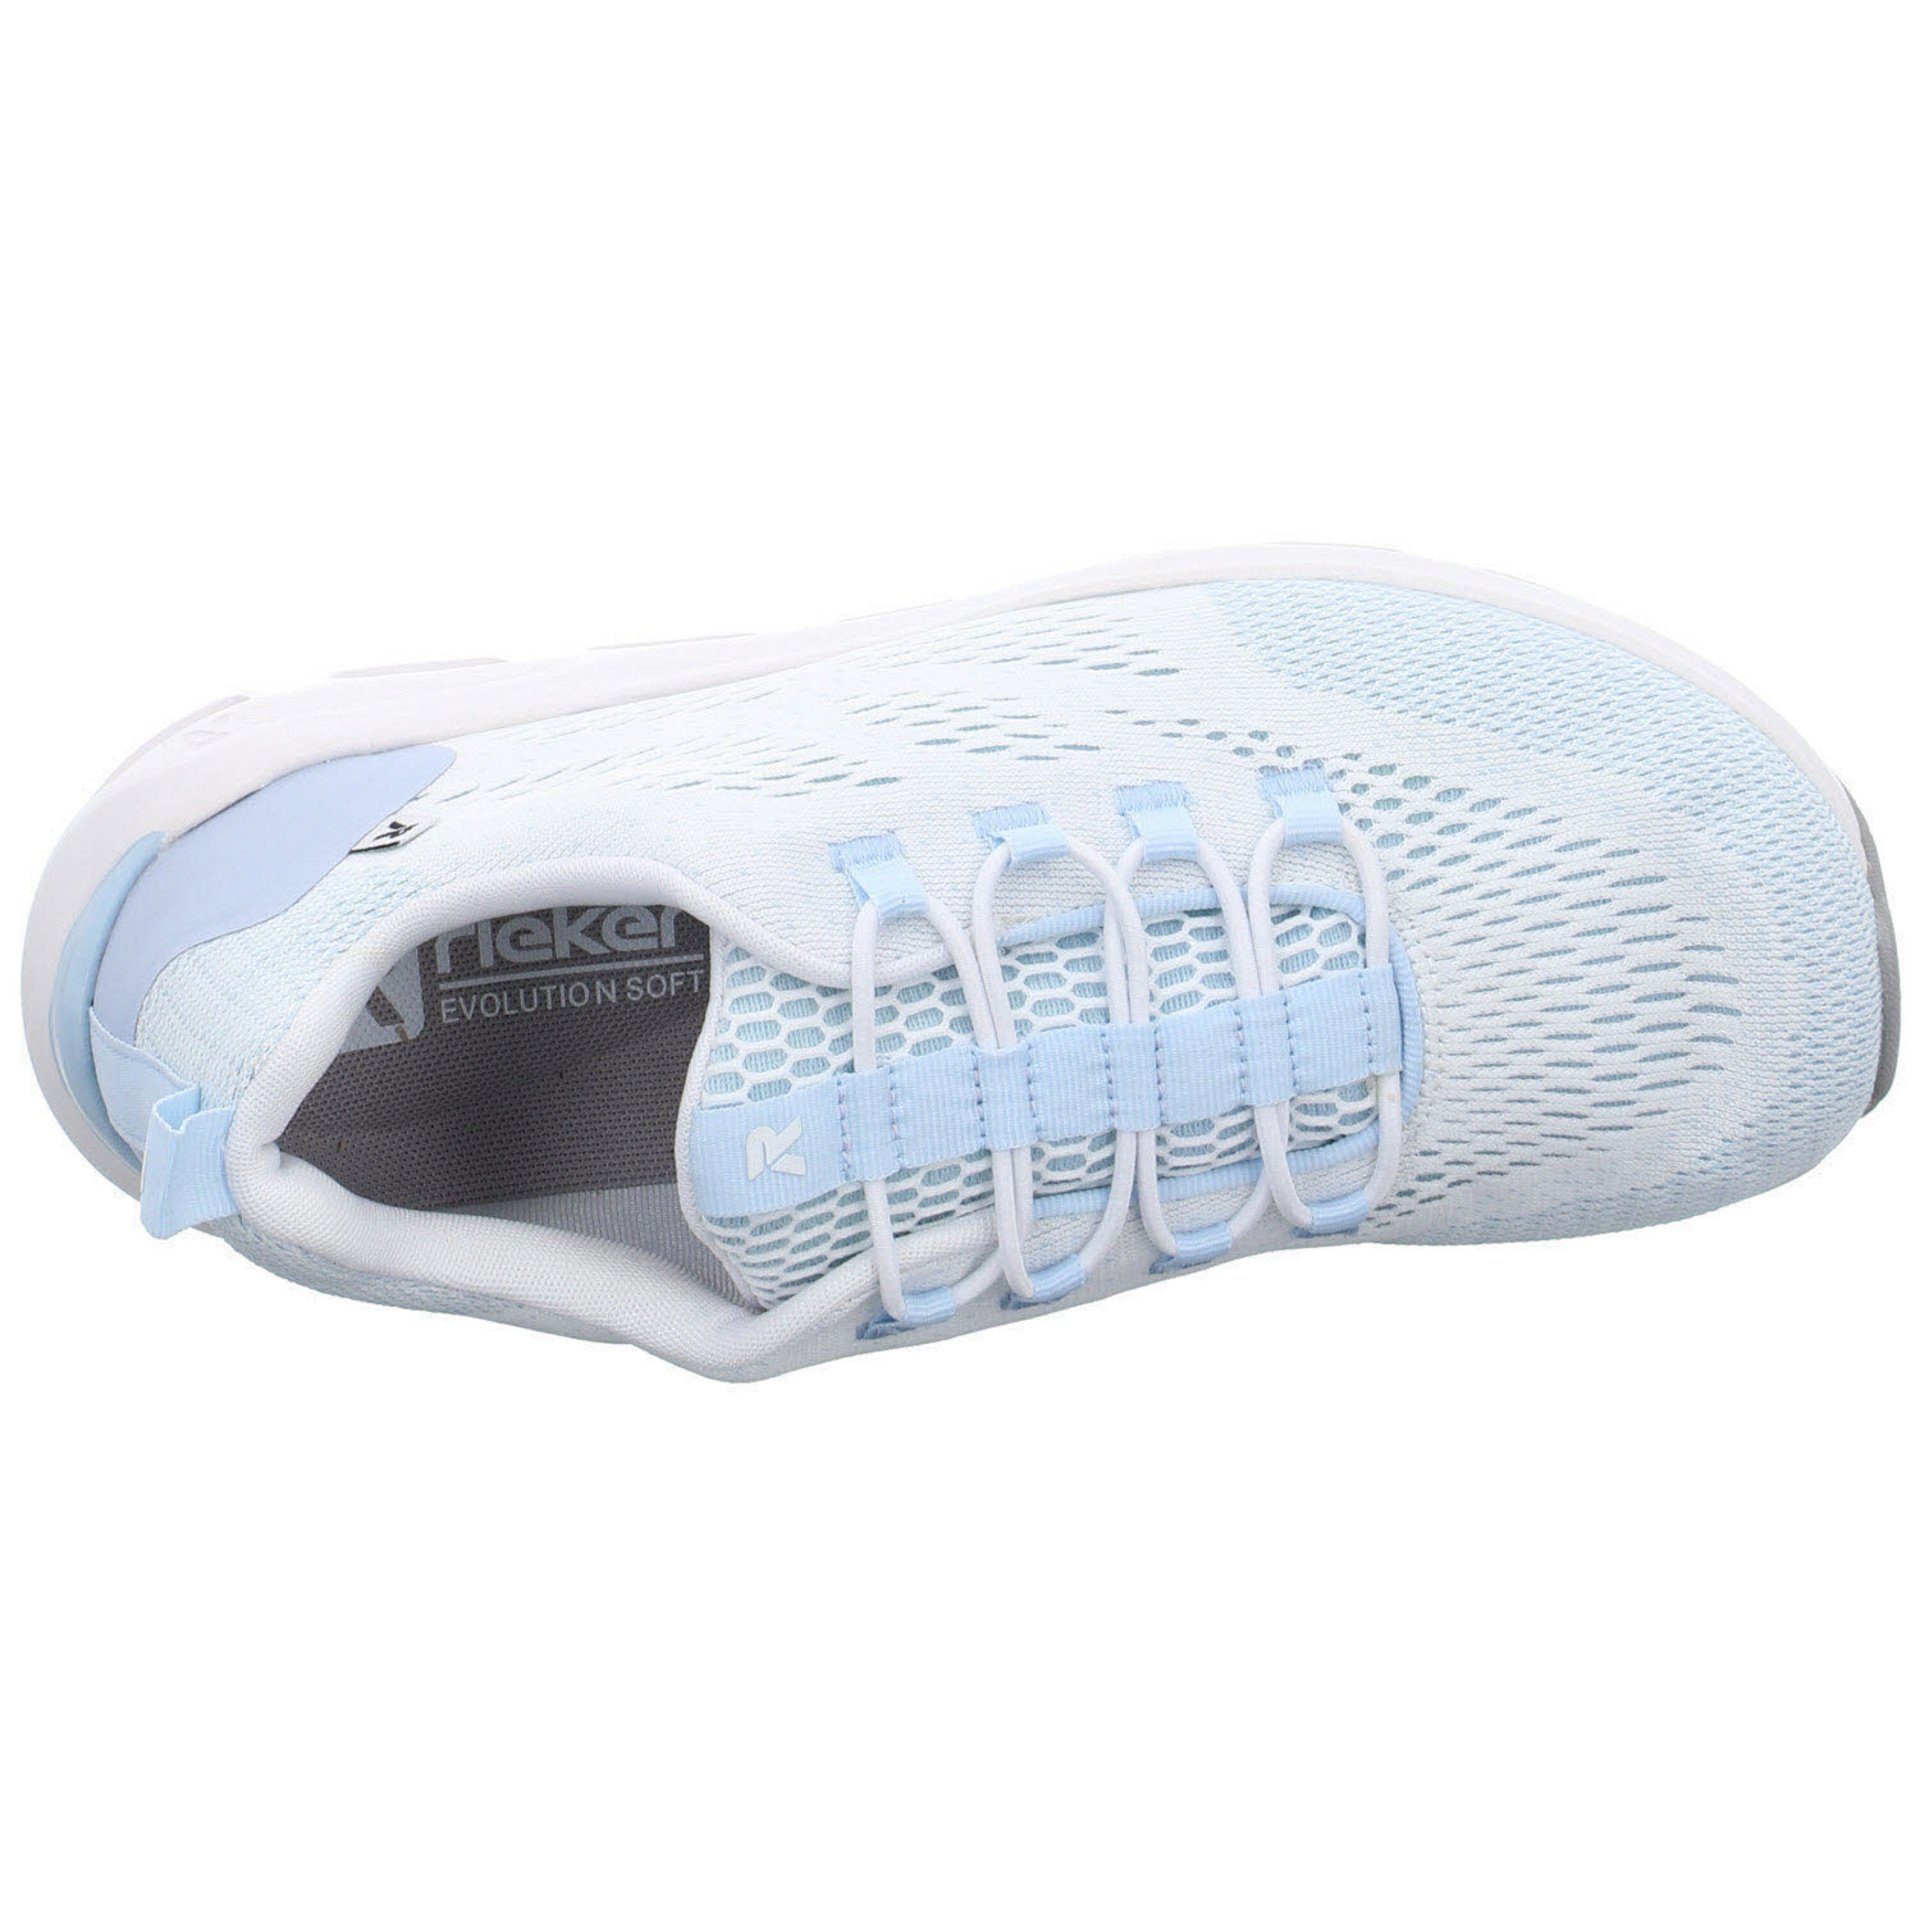 R-Evolution sportweiss-ciel/ciel Sneaker Rieker Schuhe Textil Slipper Slip-On Sneaker Damen